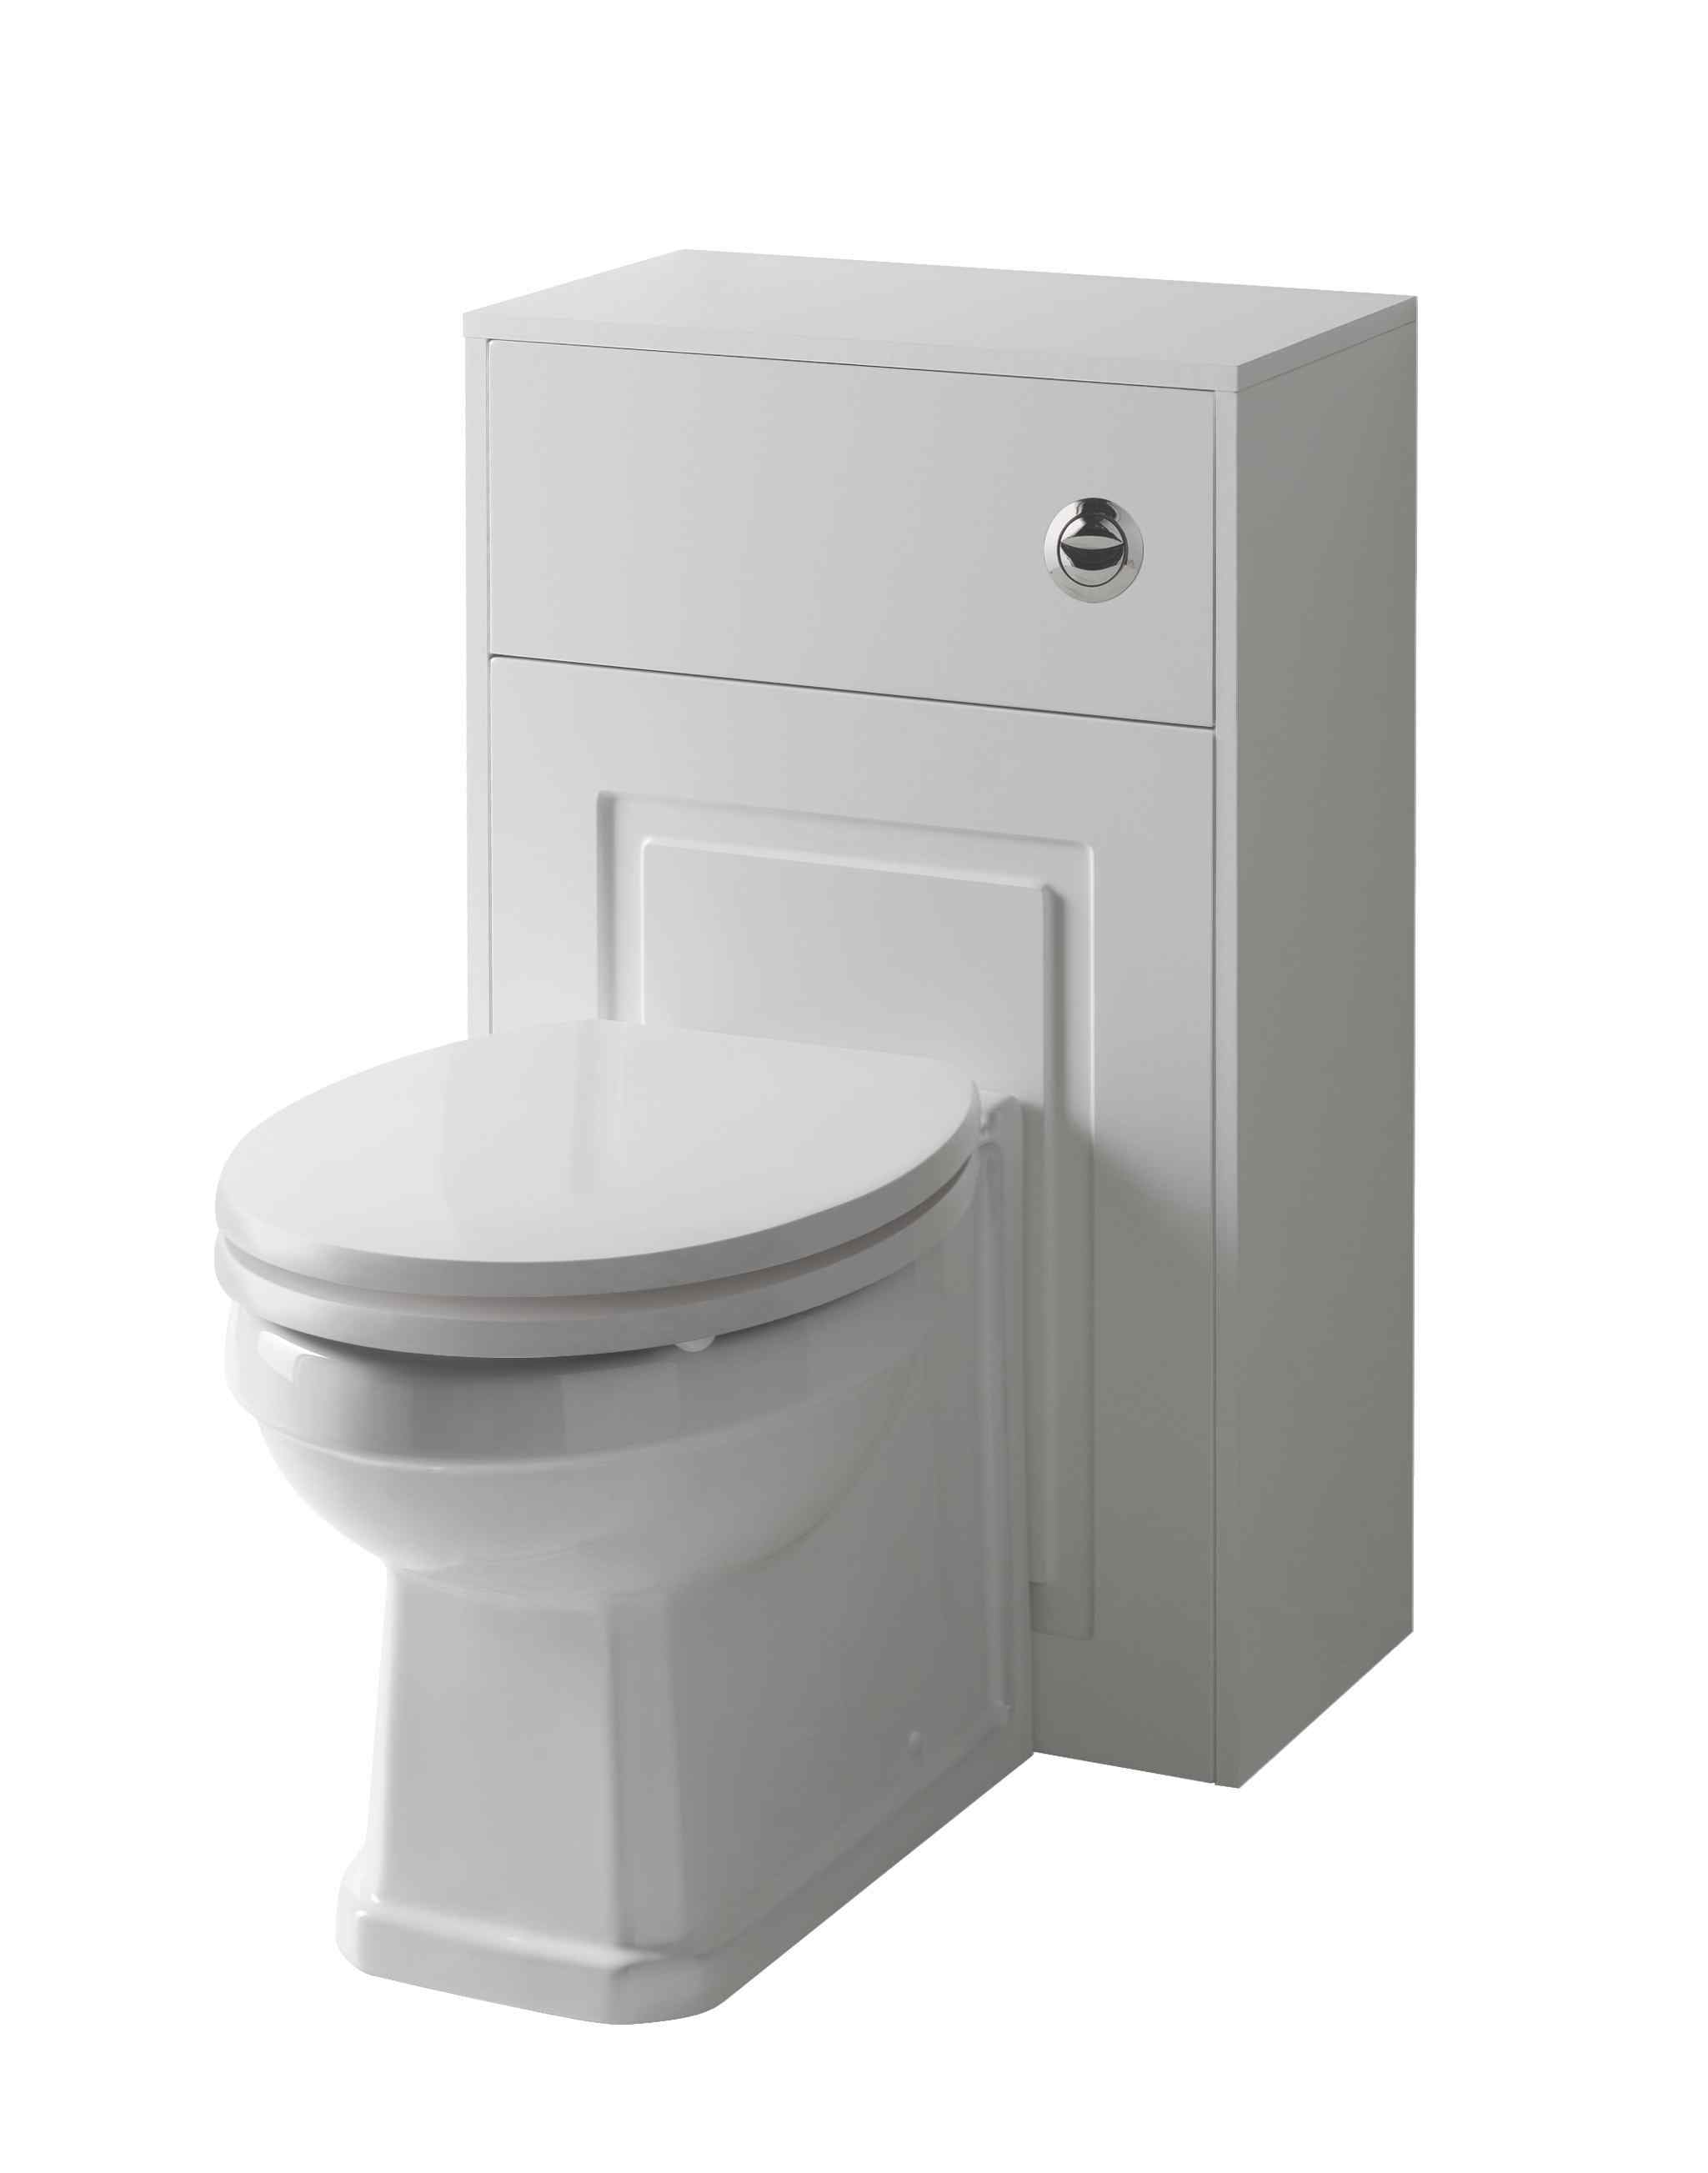 Astley Matt White WC Unit: Sleek 1400mm Toilet and Basin Combo